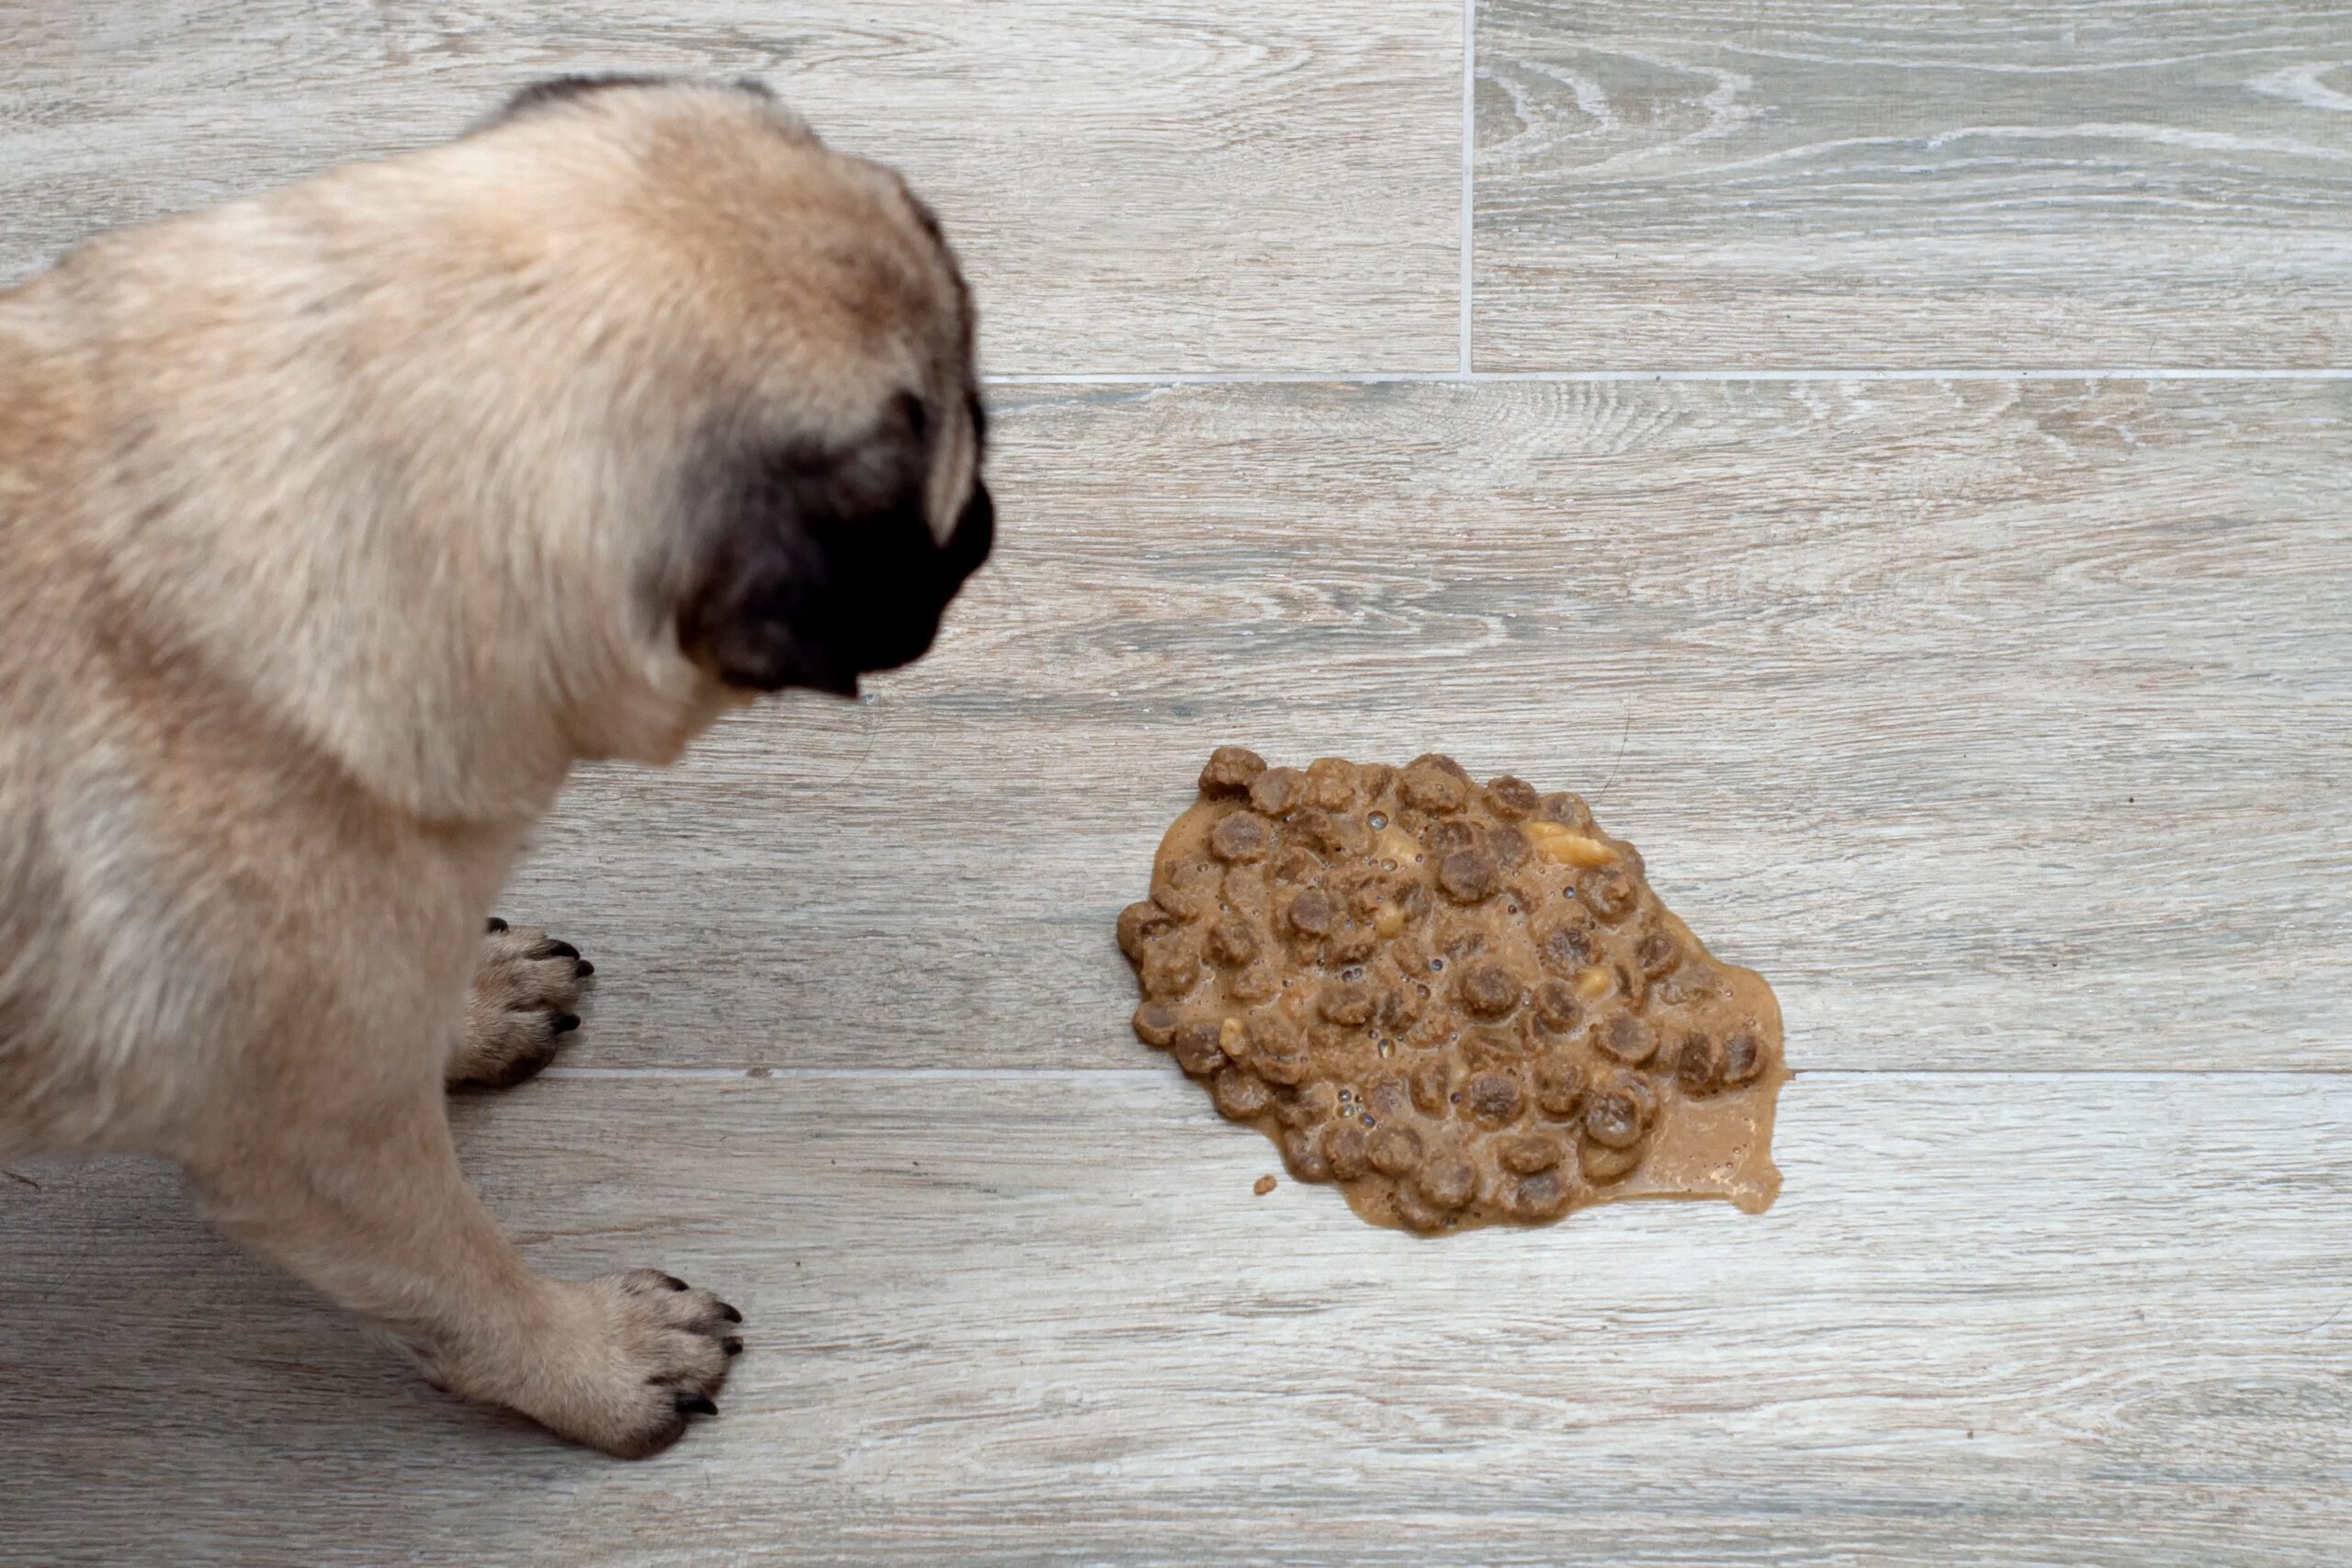 Dog Throwing Up Undigested Food: Should I be Concerned?